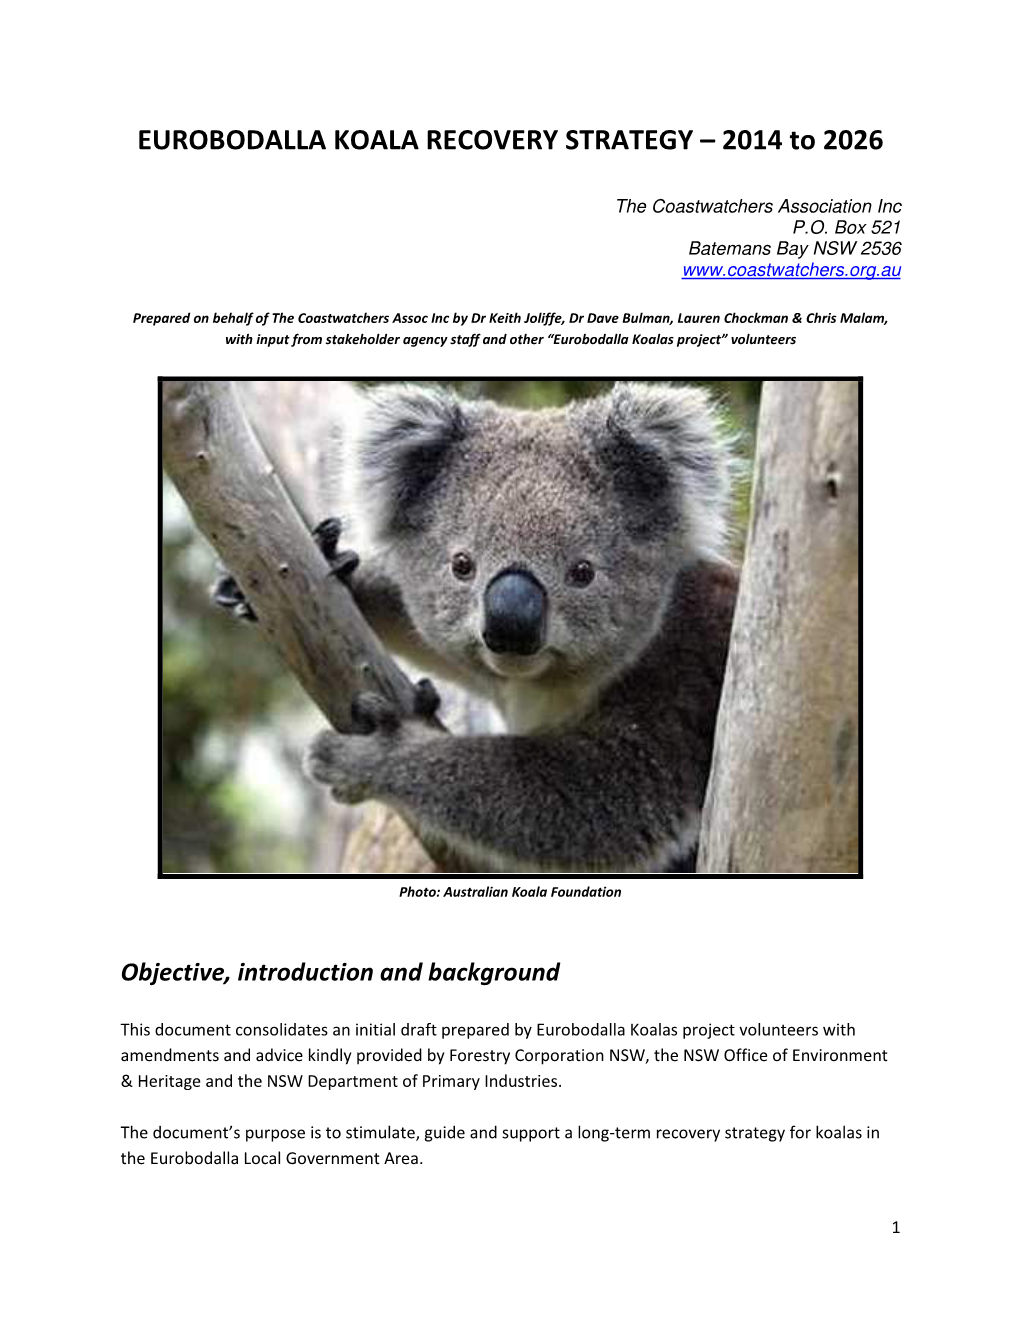 Final Eurobodalla Koala Recovery Strategy